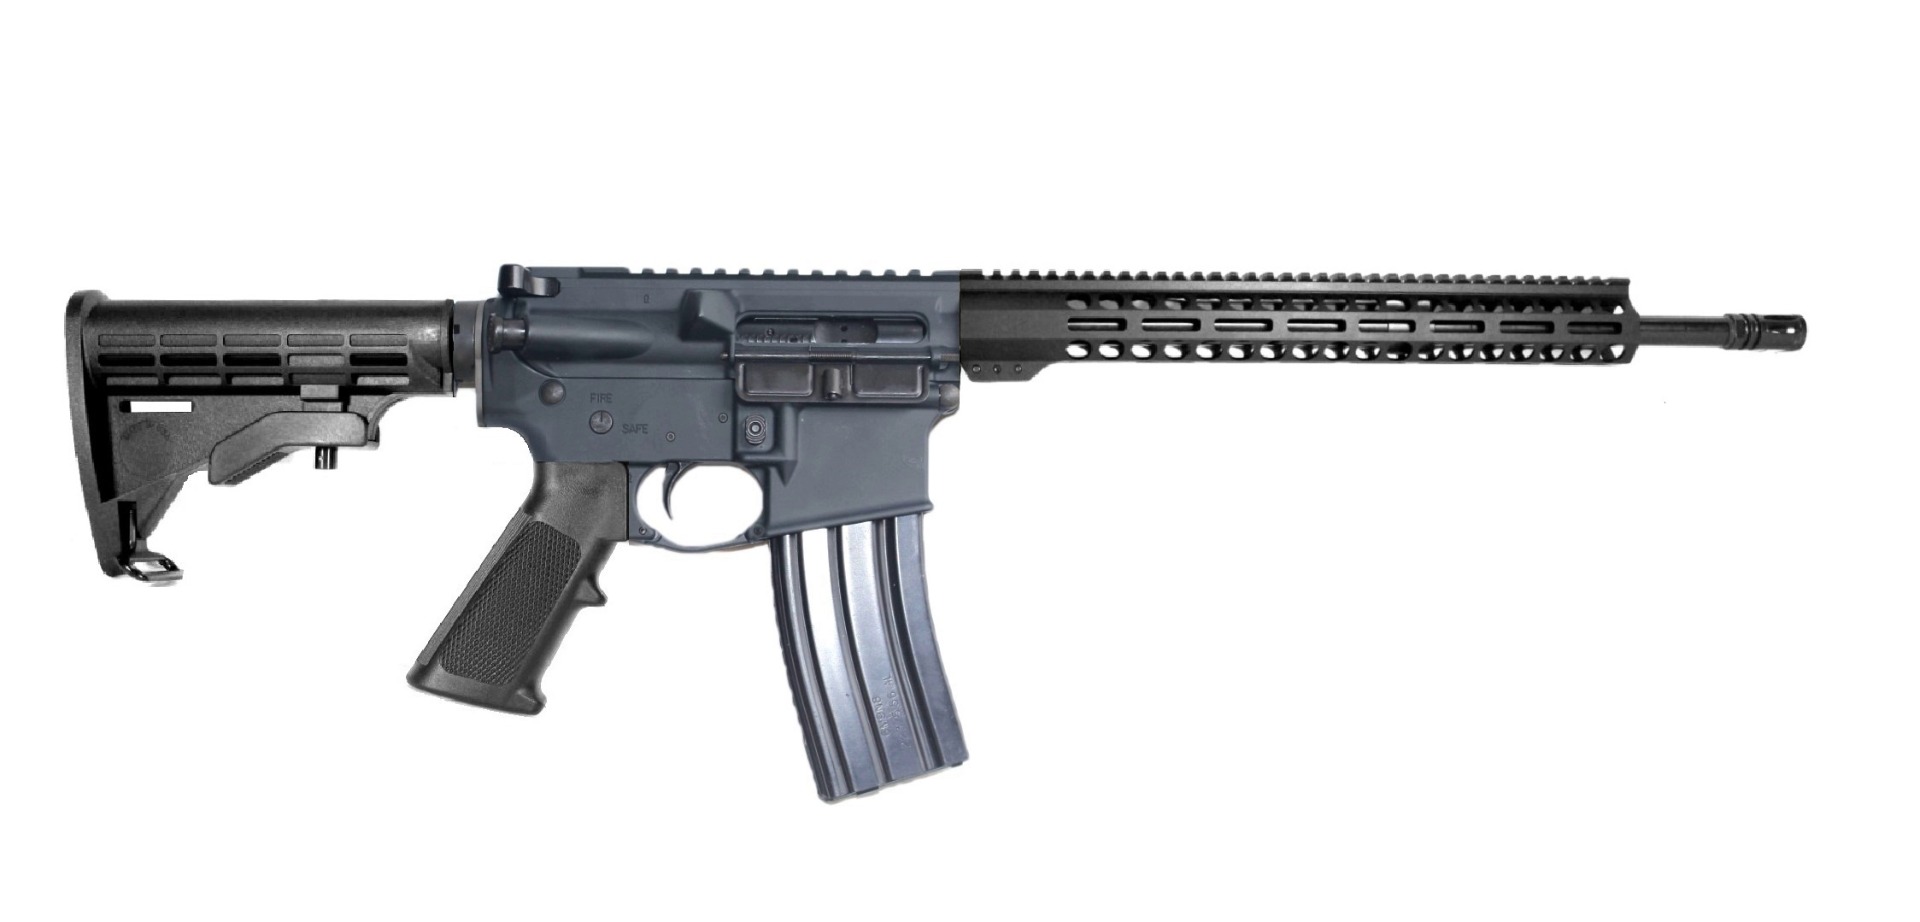 18 inch 350 Legend AR-15 Rifles For Sale - USA MADE